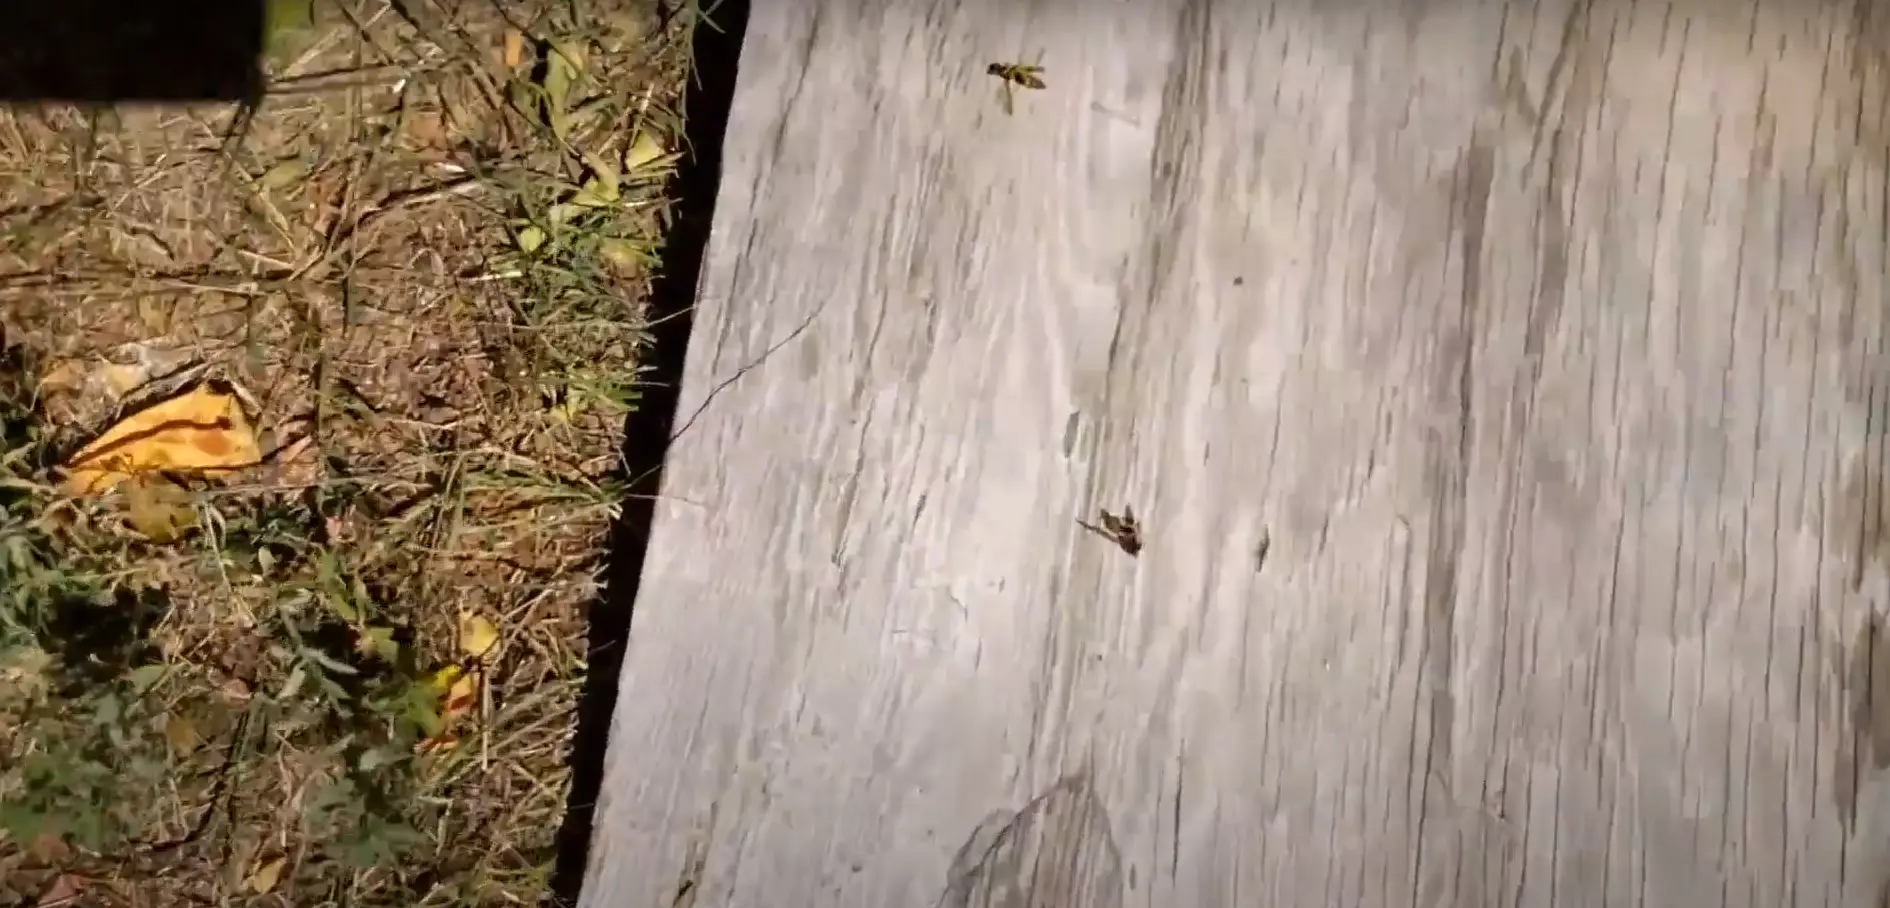 Will Wasps Return to a Sprayed Nest?